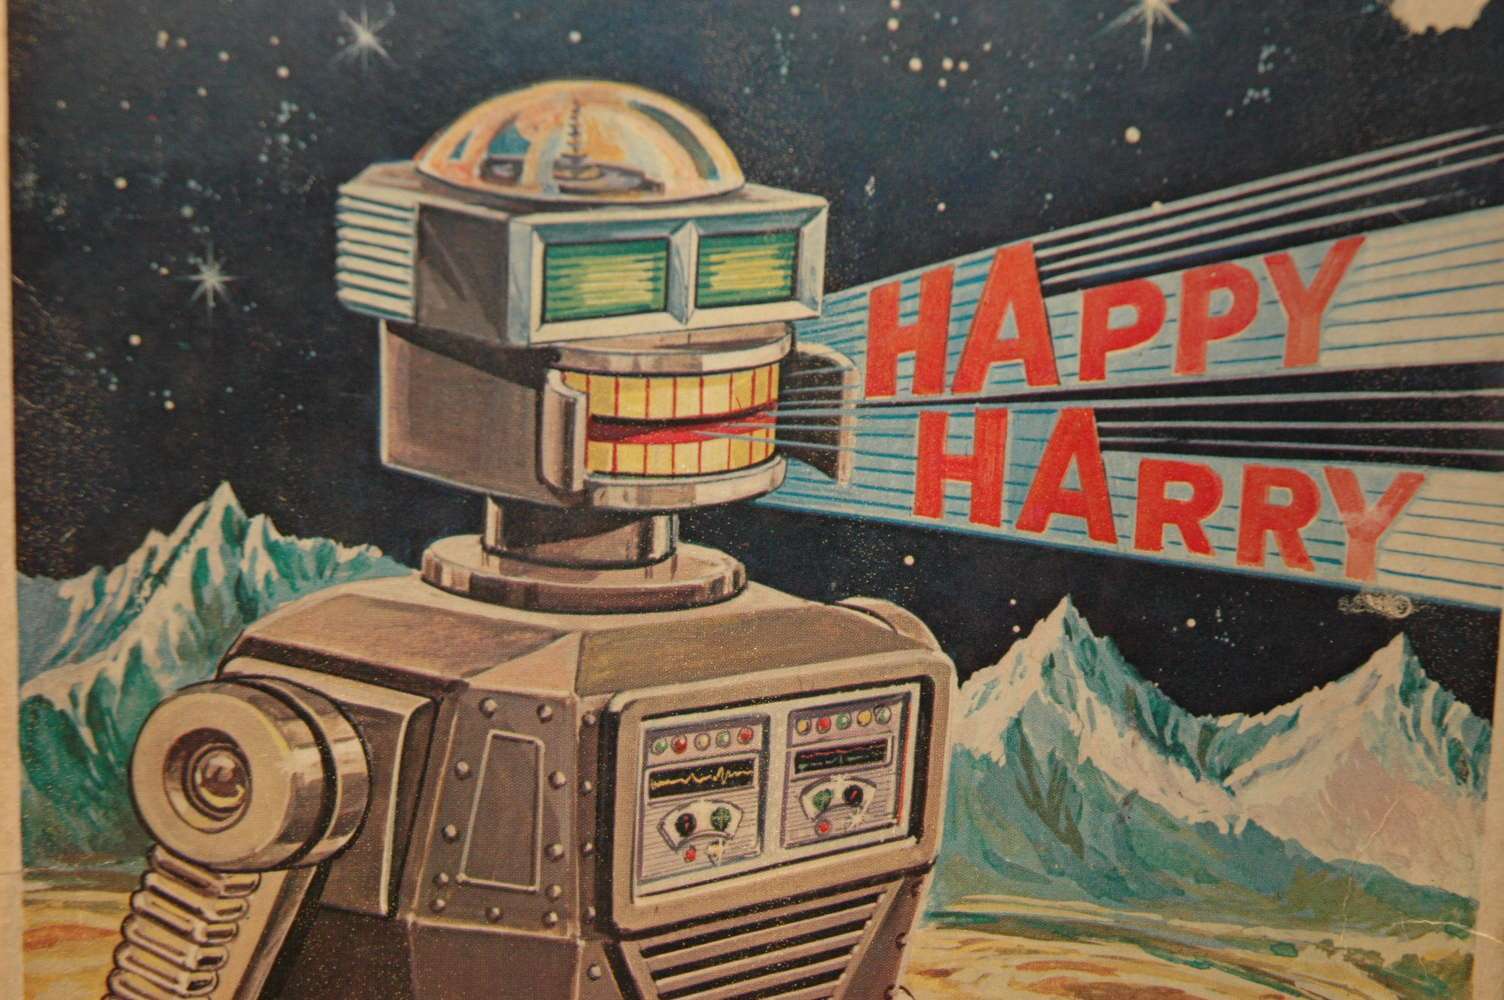 Waco / Yonezawa - The Hysterical Robot Happy Harry